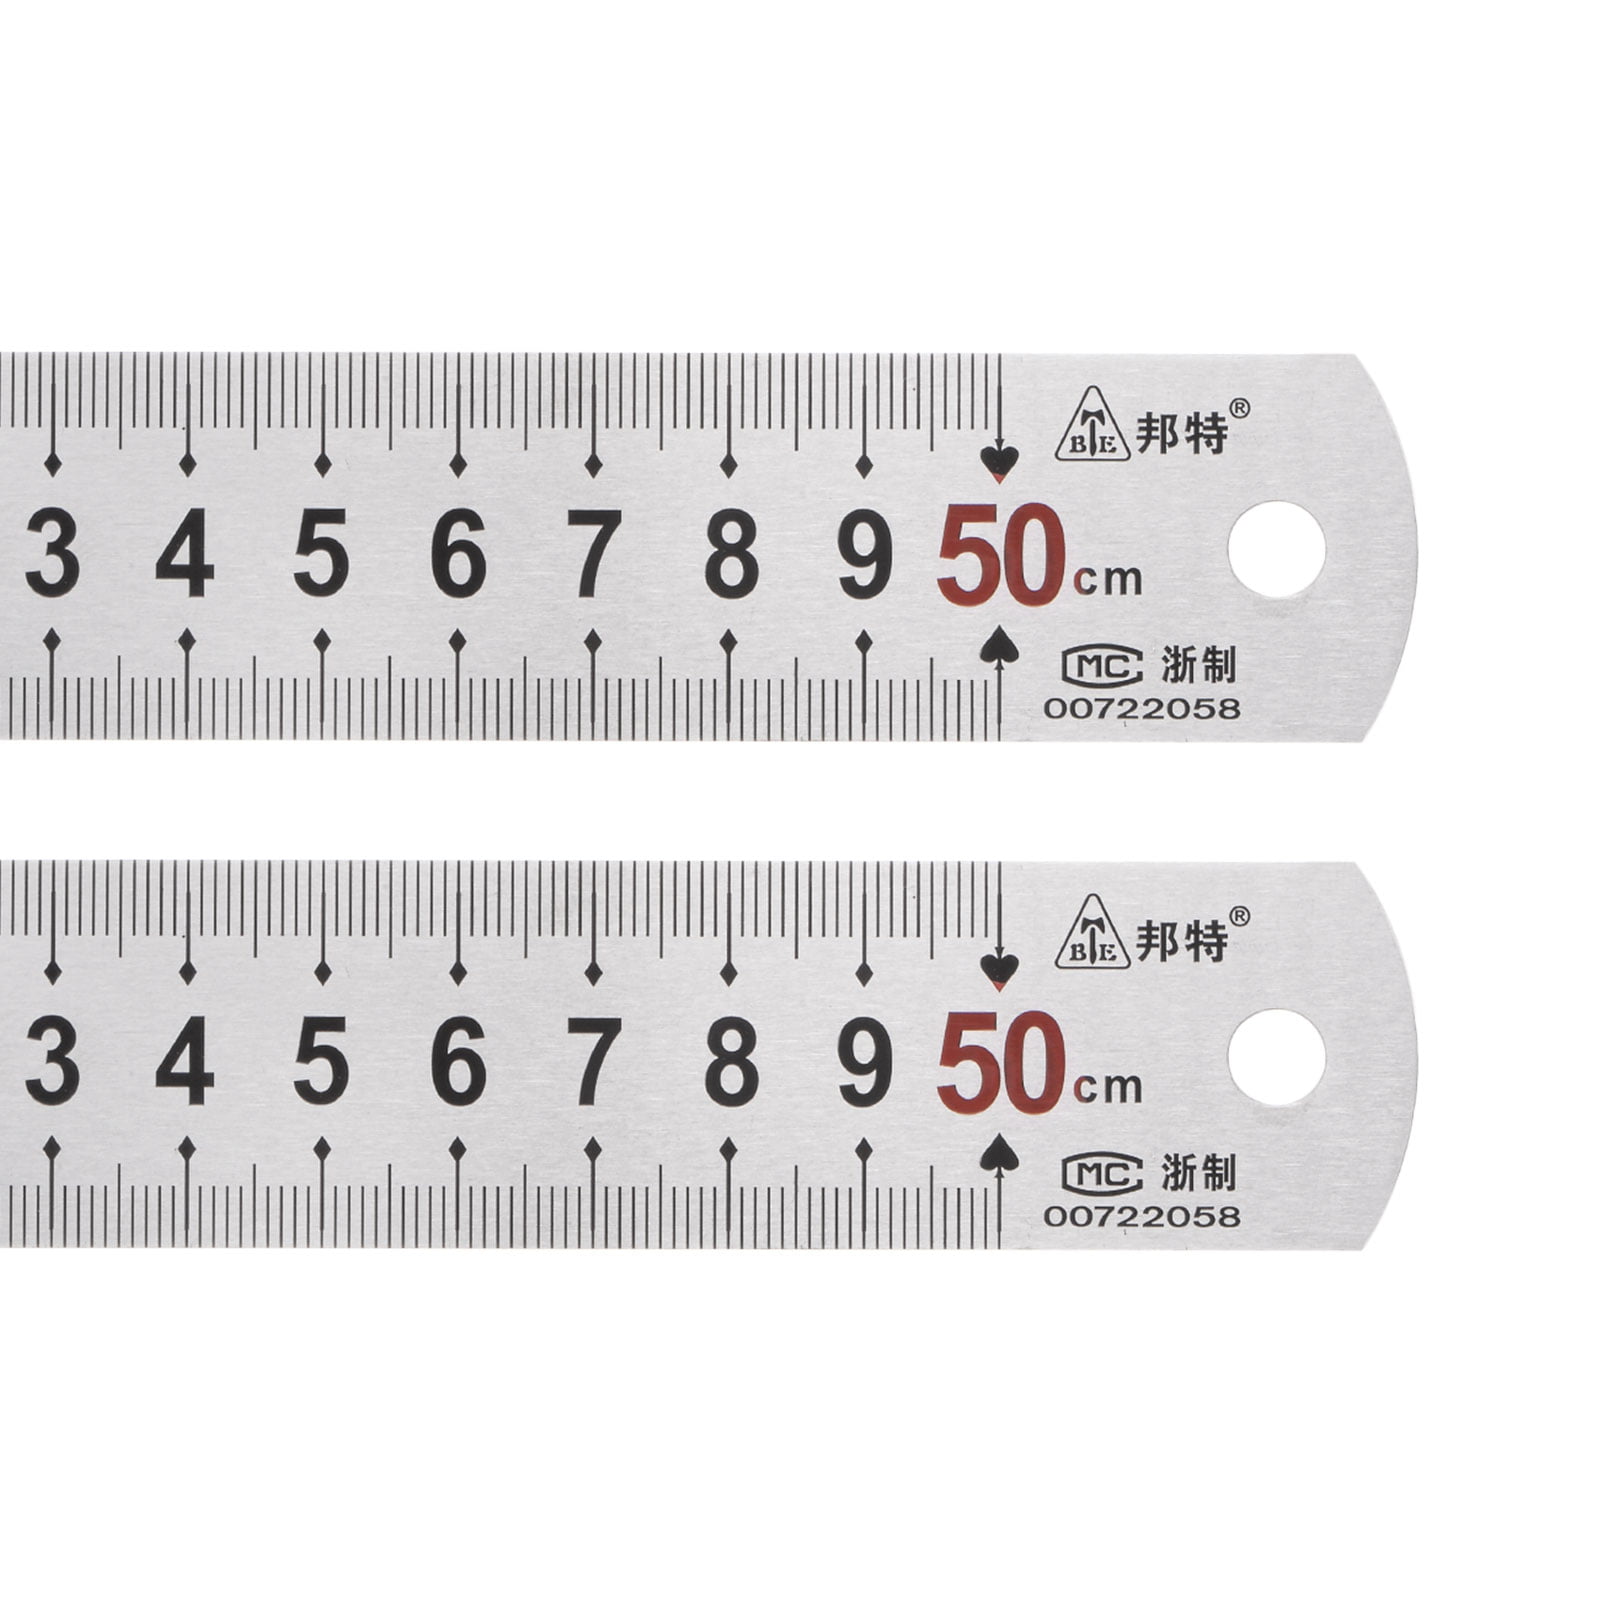 0.5 ” Wide – “1/2FMW” – Fractional/Metric Adhesive Metal Ruler – 1